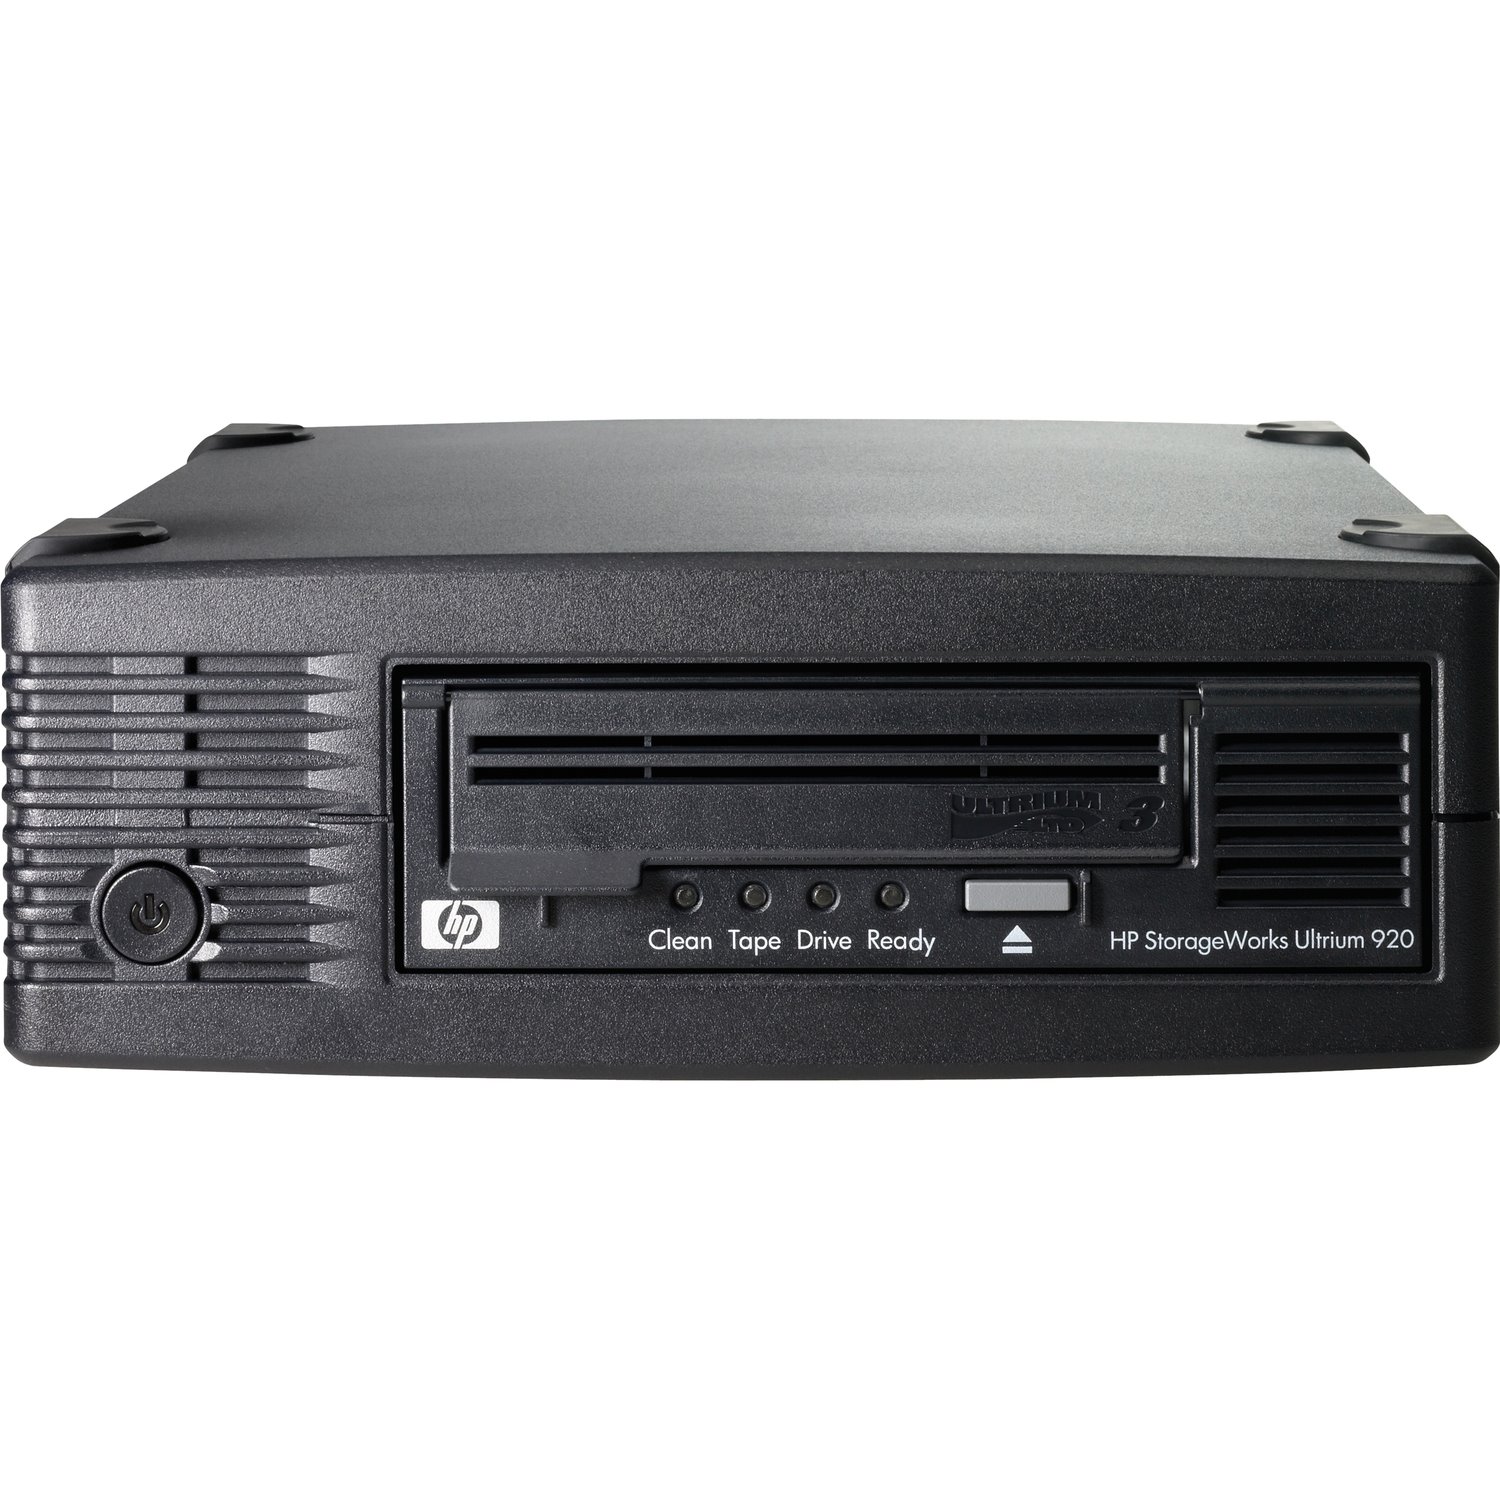 HPE Ultrium 920 SAS External Tape Drive